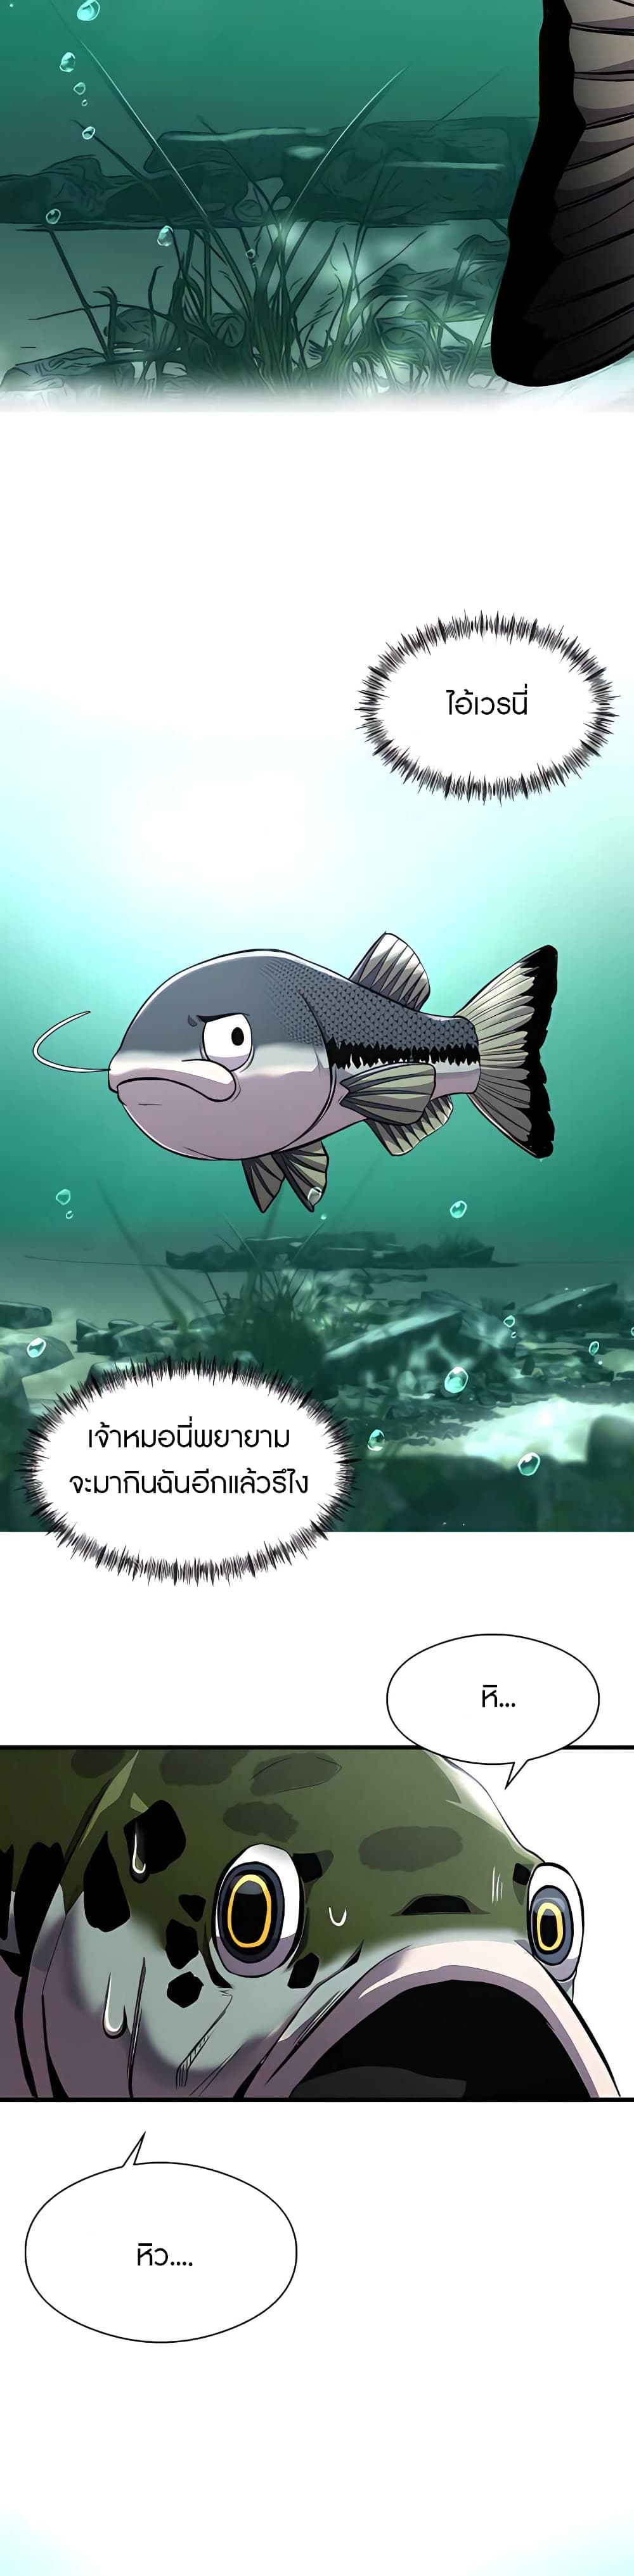 Fish4 28